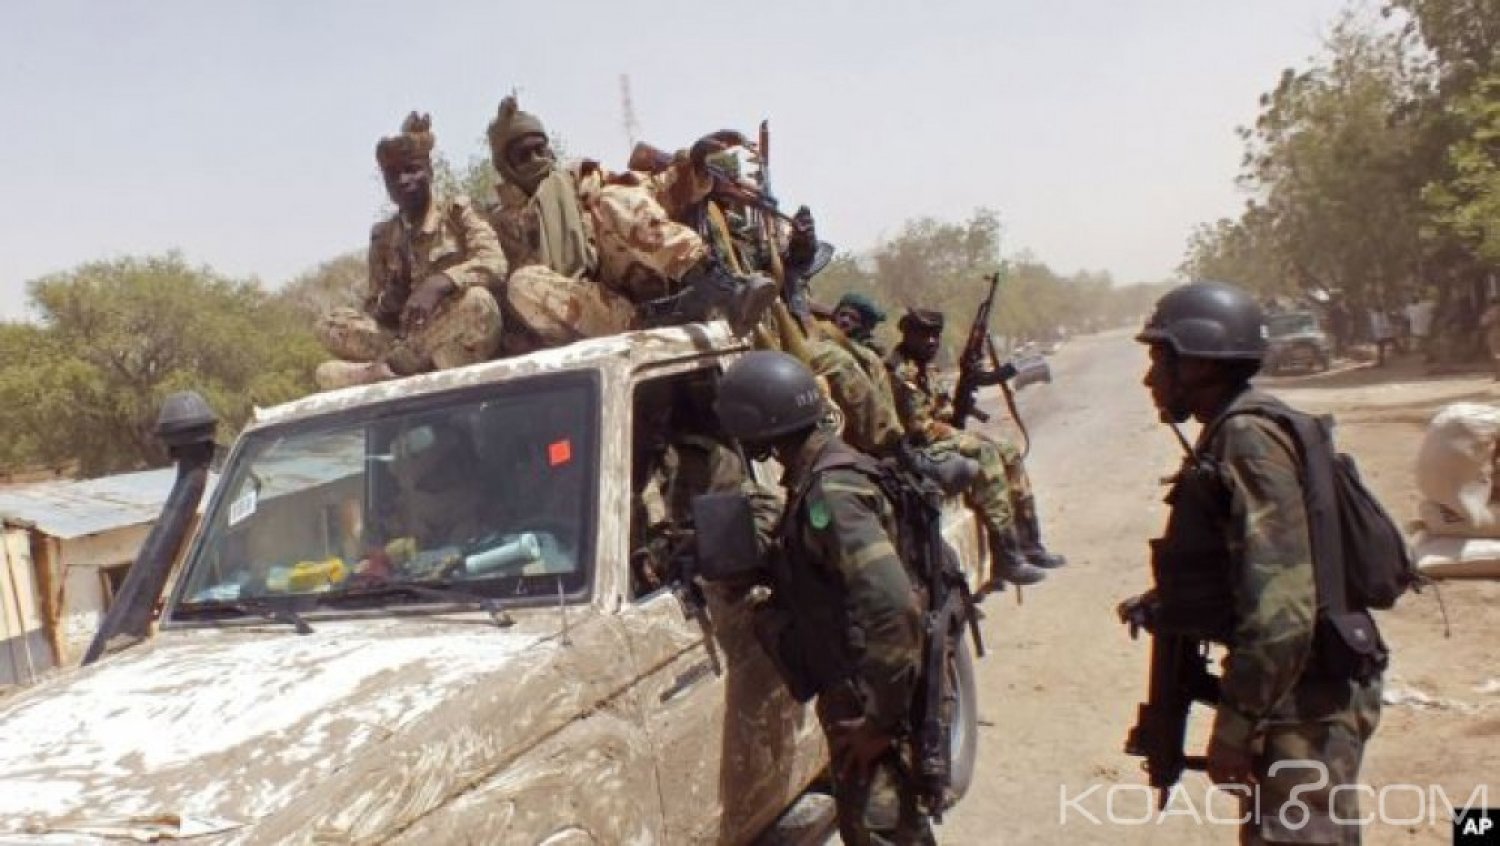 Cameroun: Un soldat trouve la mort dans une embuscade de Boko Haram